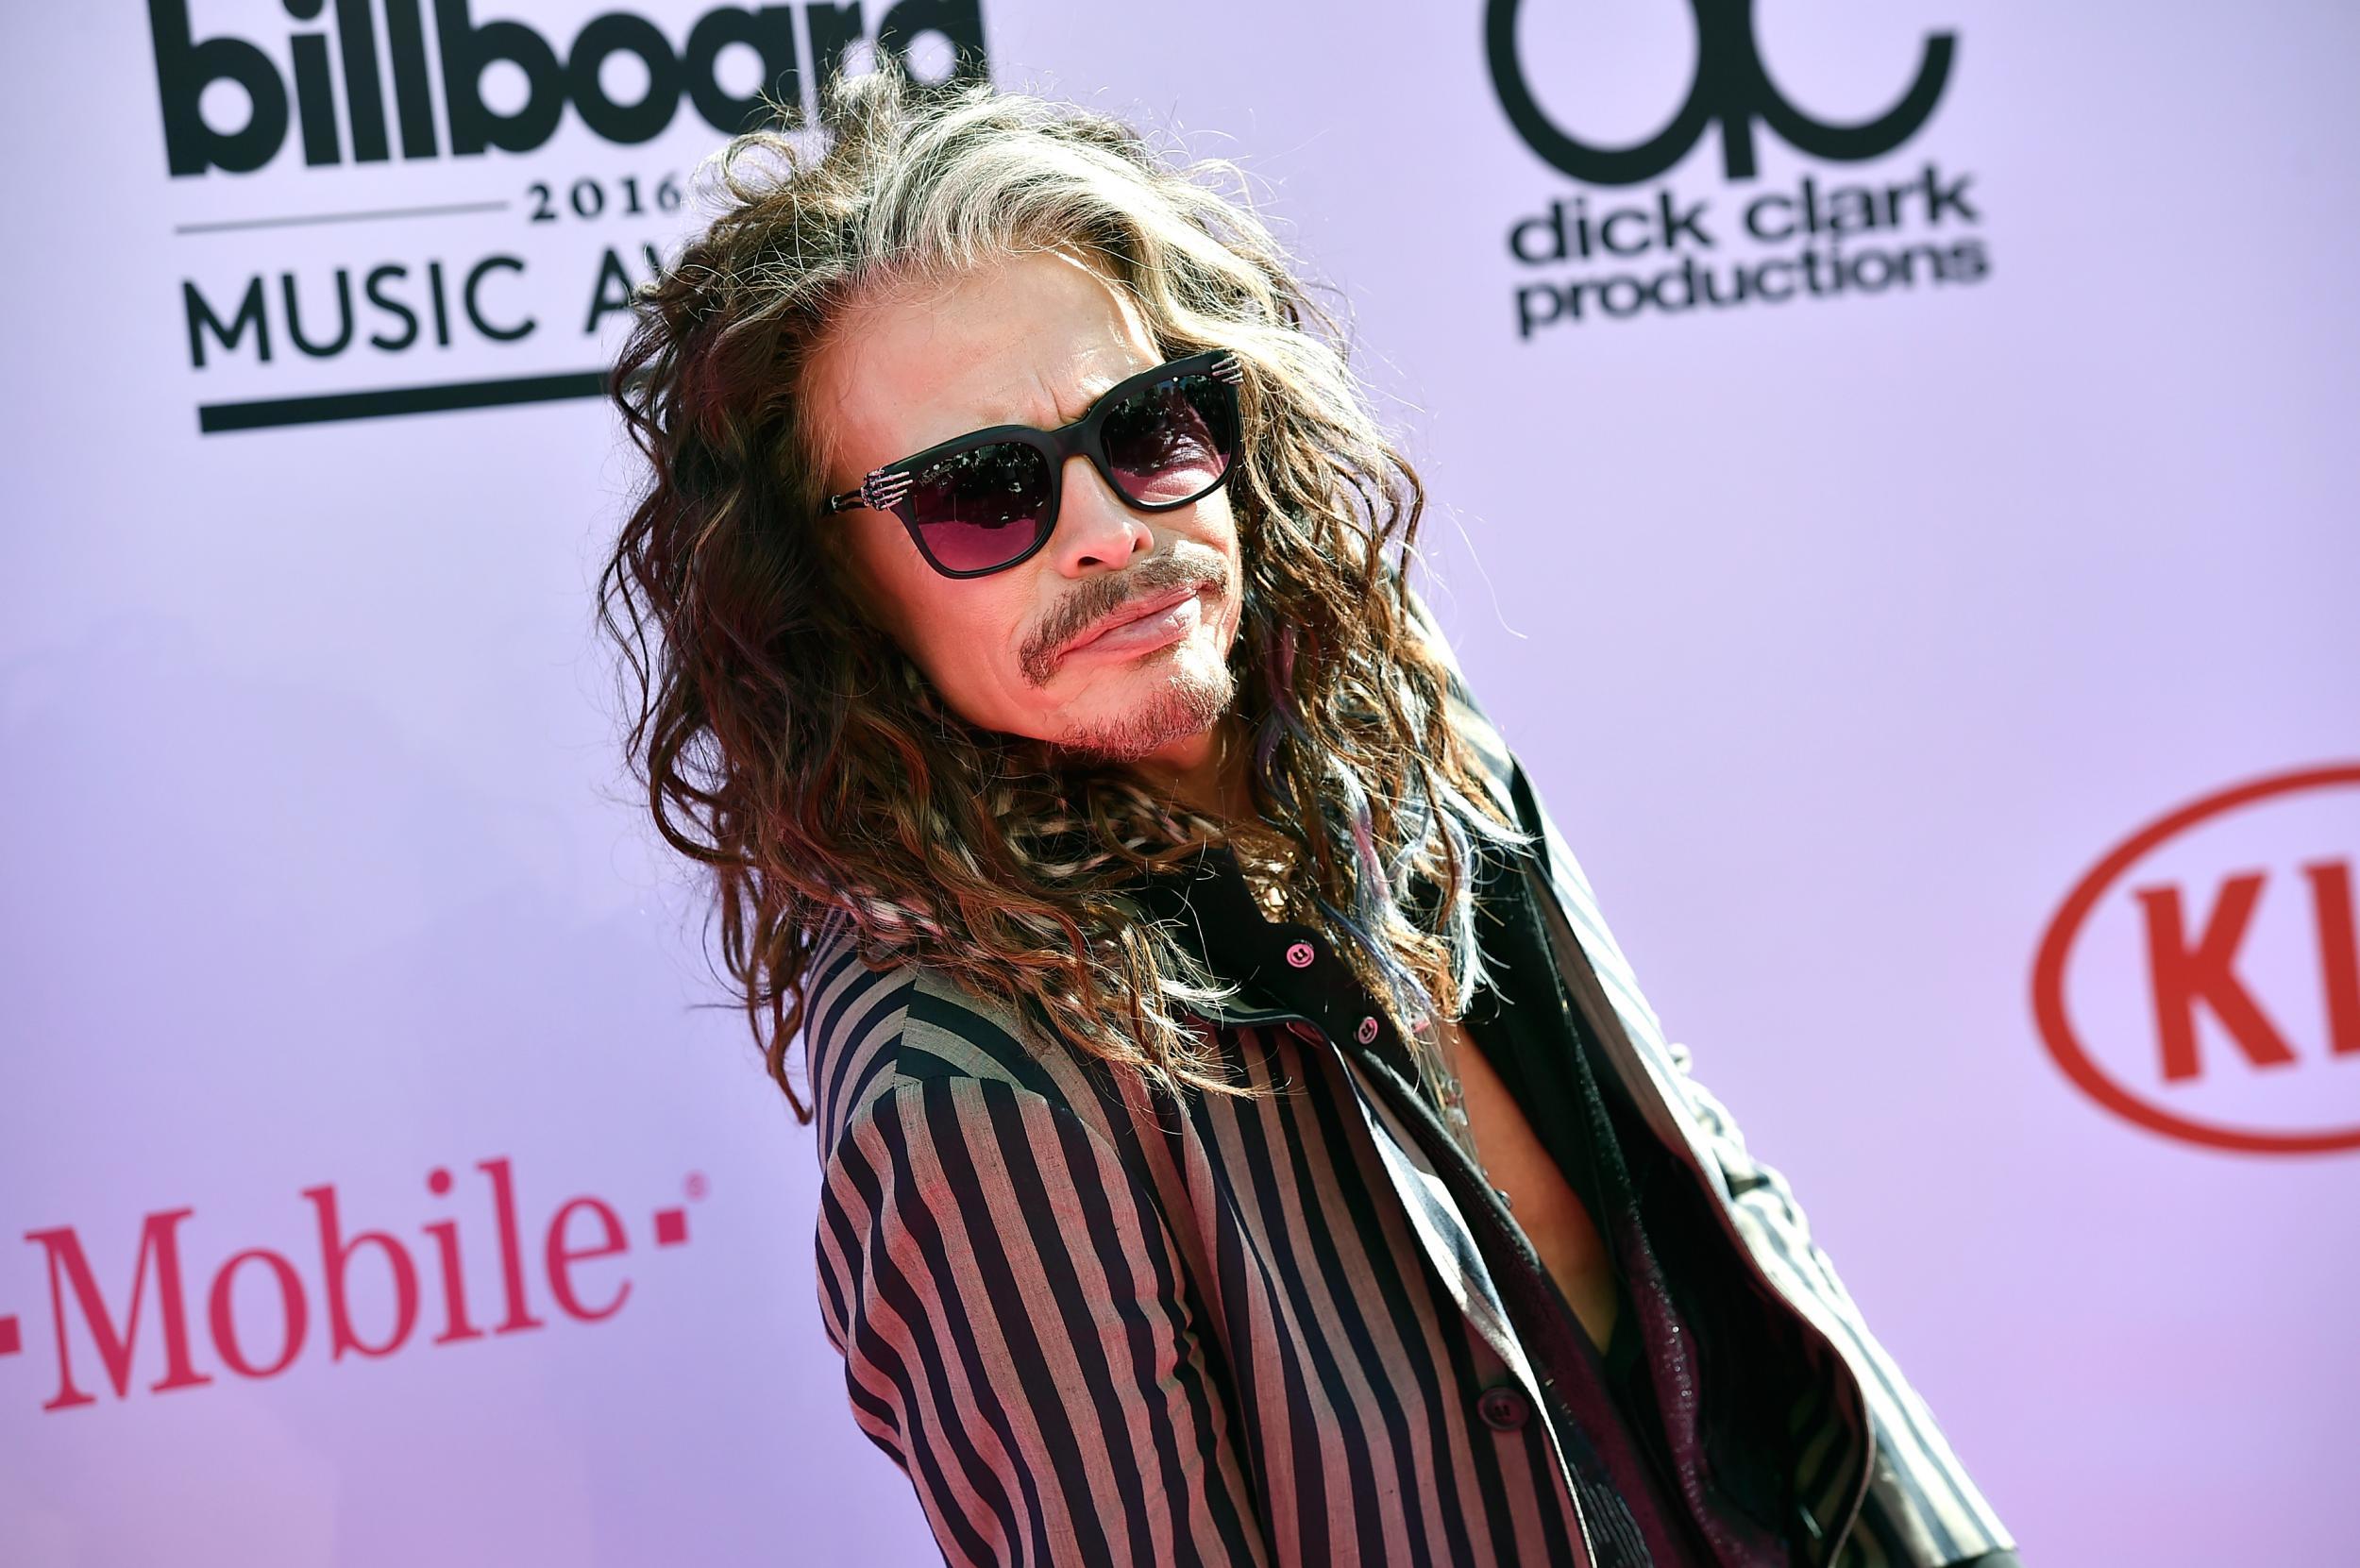 Steven Tyler of Aerosmith attends the 2016 Billboard Music Awards